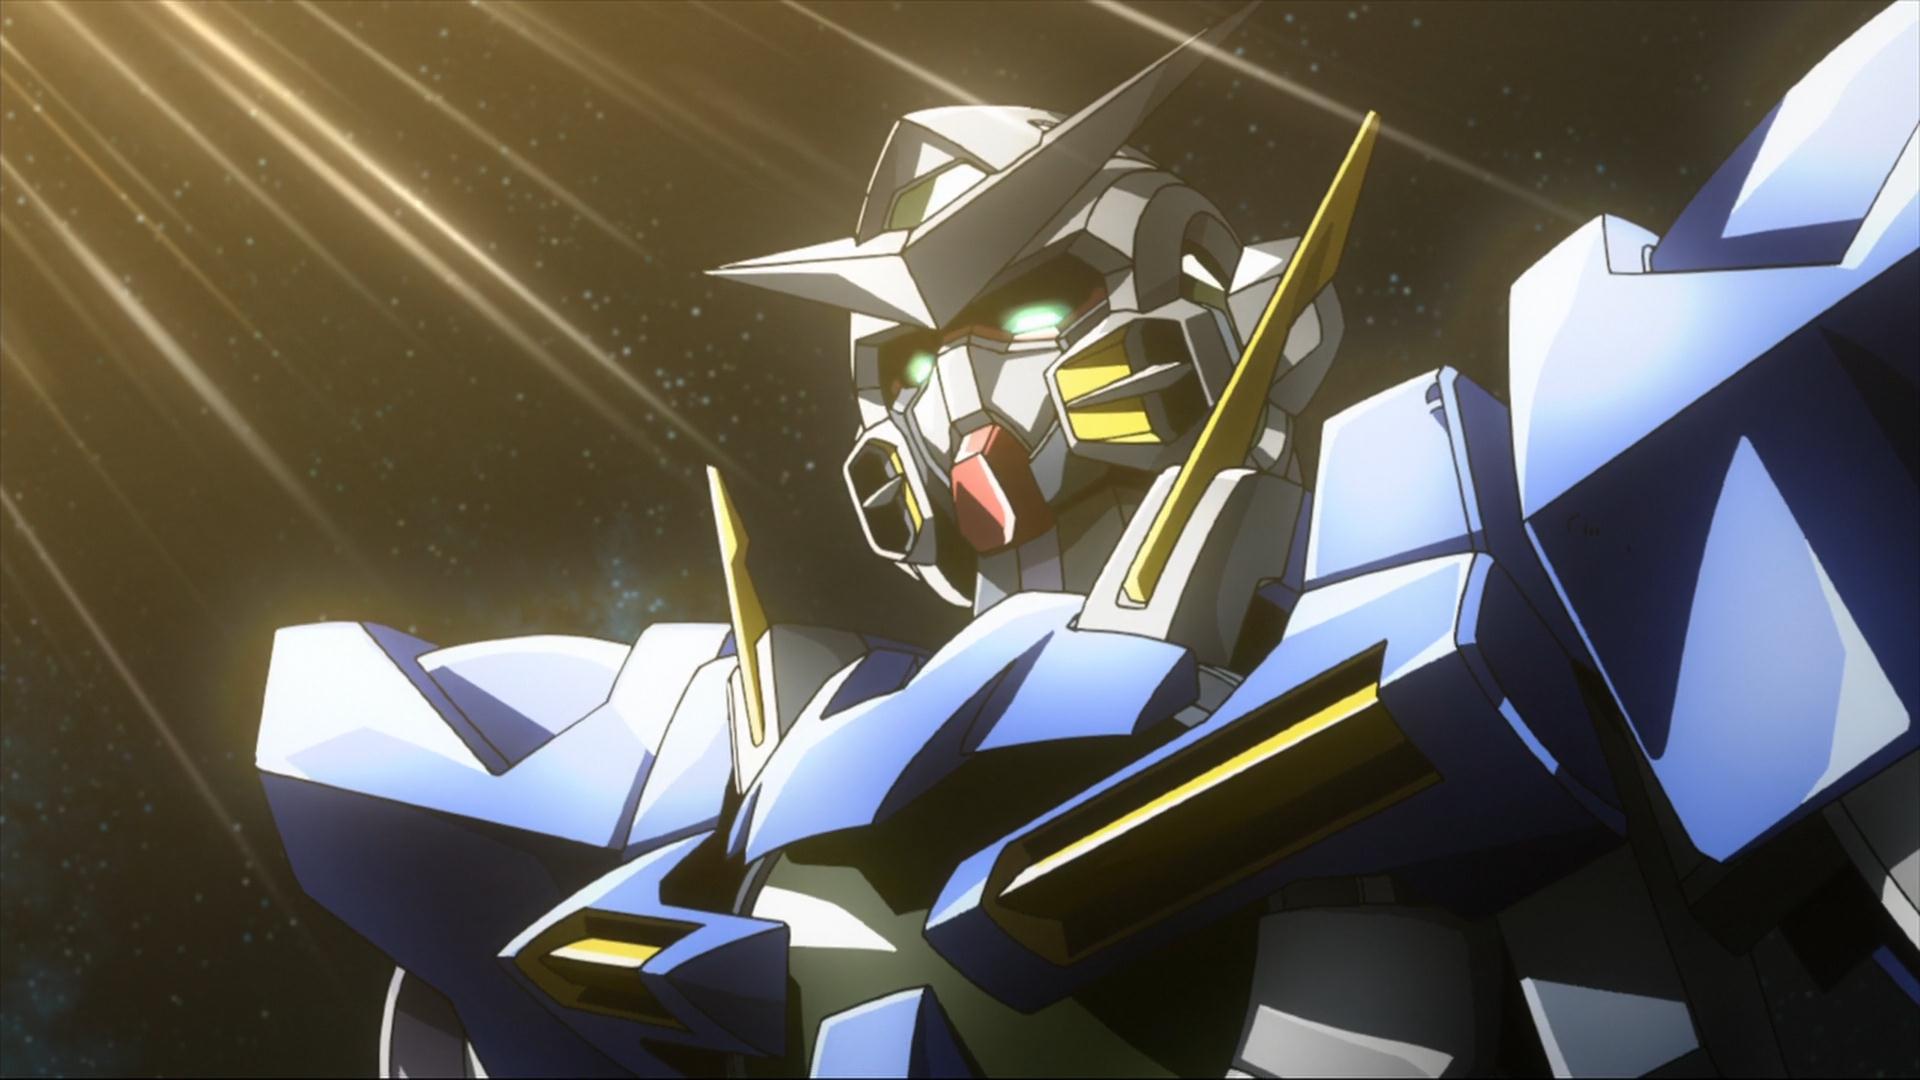 Anime 1920x1080 anime mechs Super Robot Taisen Gundam Mobile Suit Gundam 00 artwork digital art Anime screenshot Gundam Exia